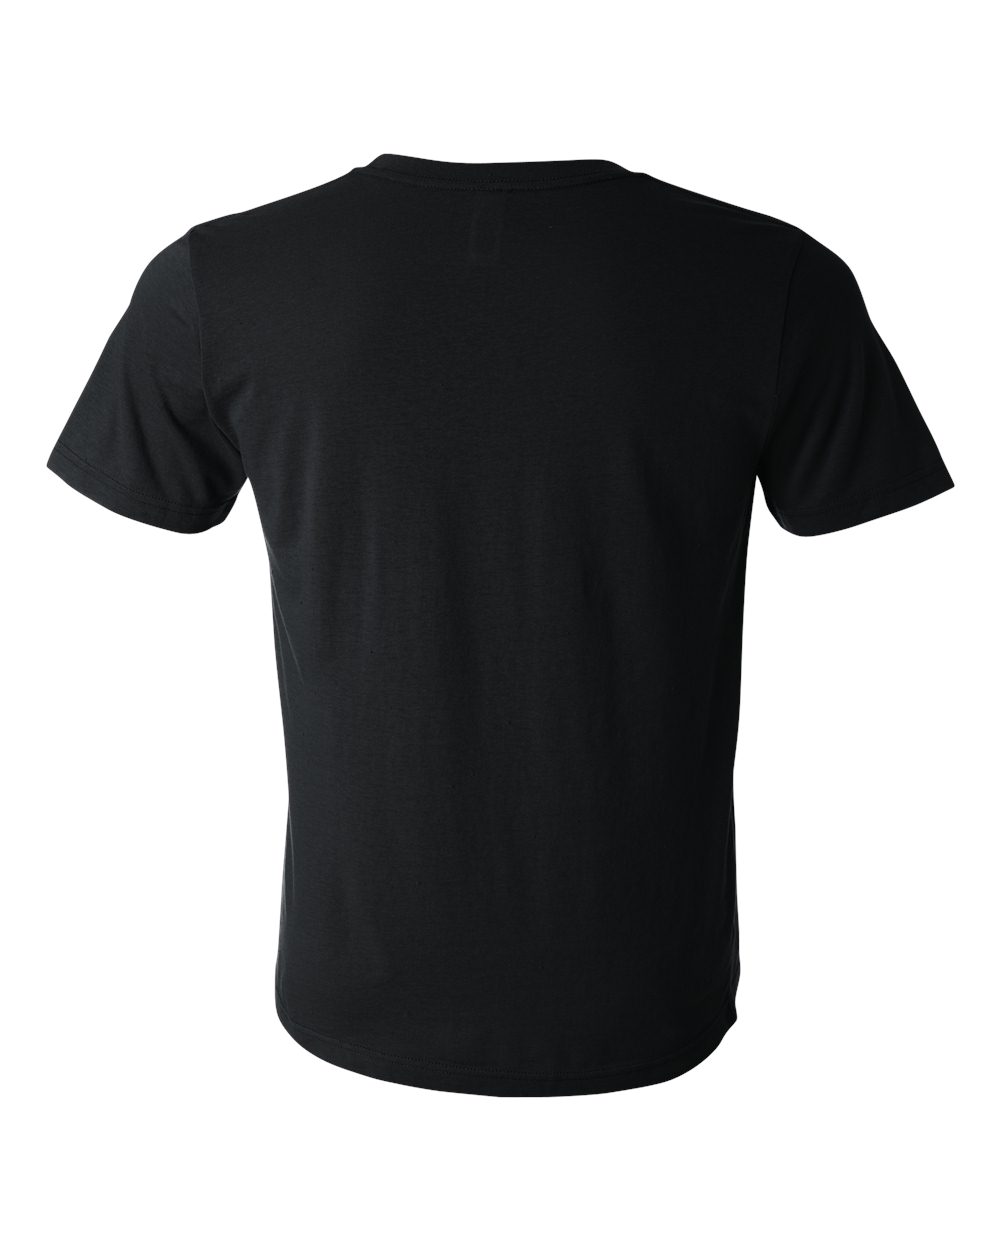 BELLA + CANVAS Unisex Blank T Shirt Cotton Polyester Texture Tee 3650 ...